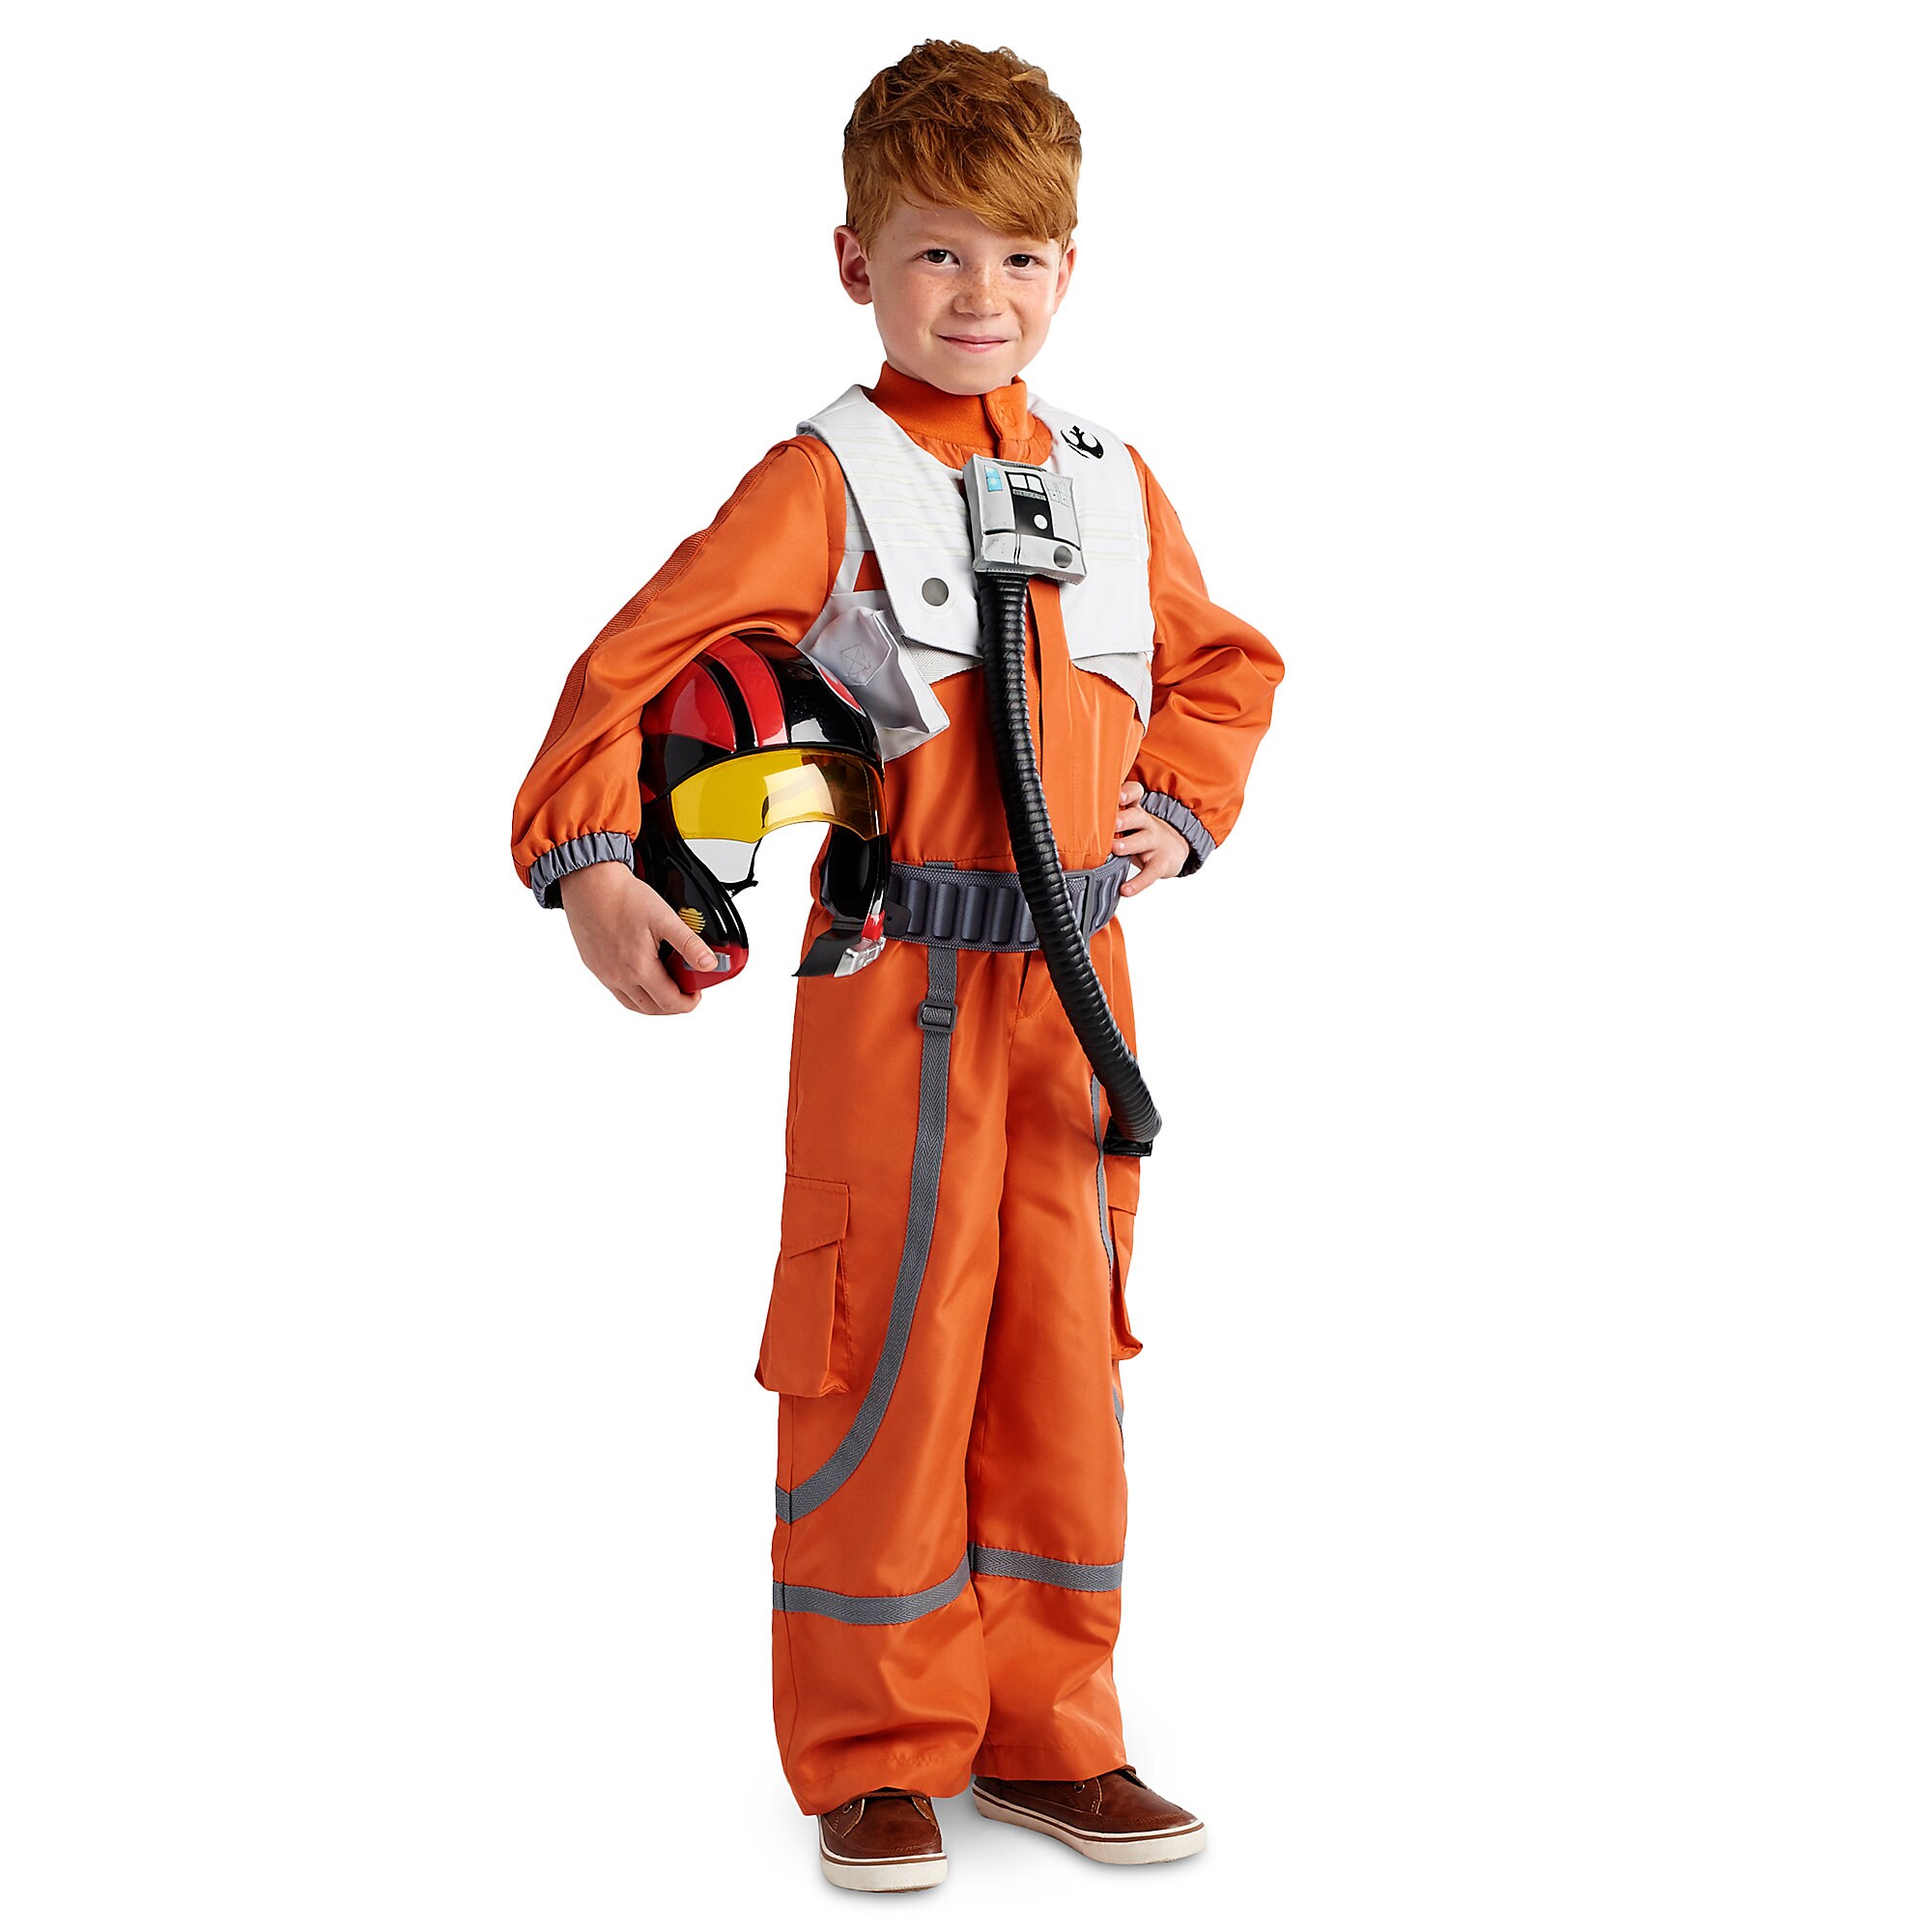 Poe Dameron Costume for Kids - Star Wars